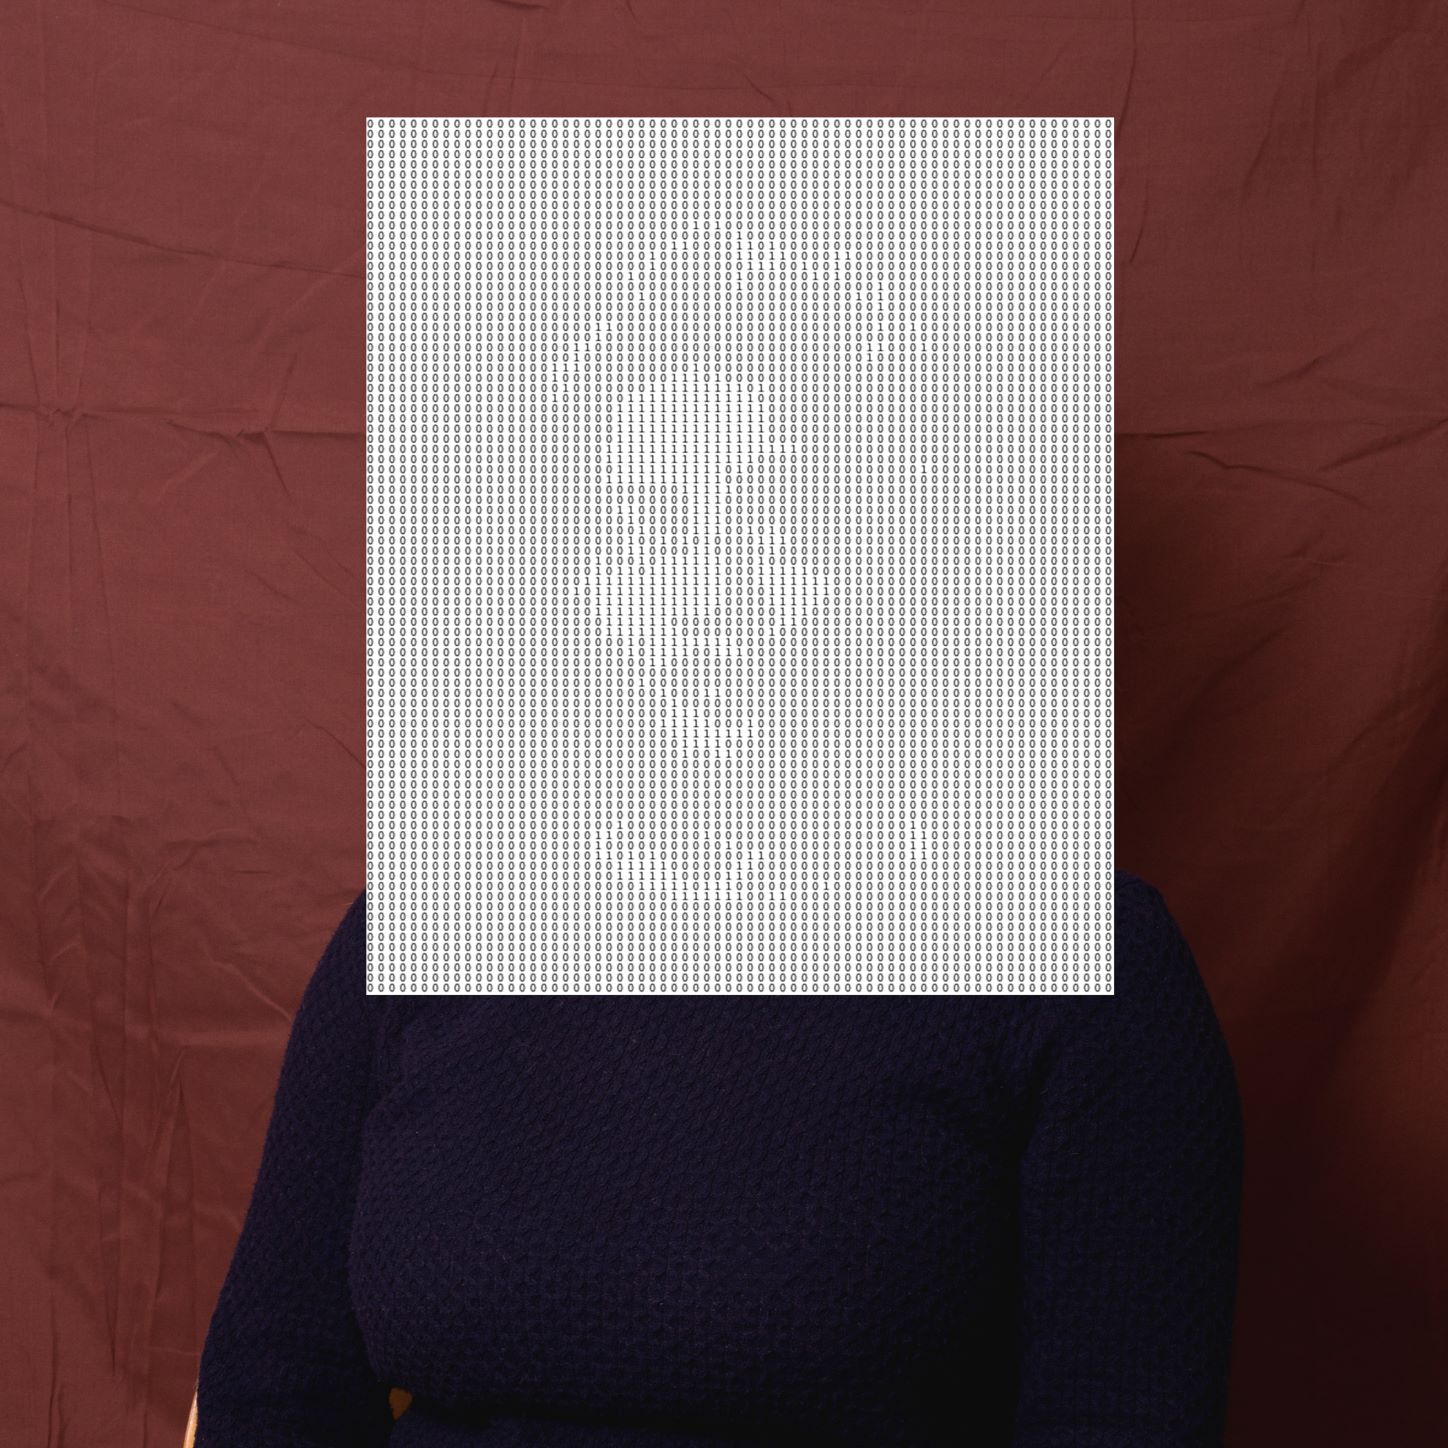 New Exhibition: Alice Marcelino // Black Skin White Algorithm